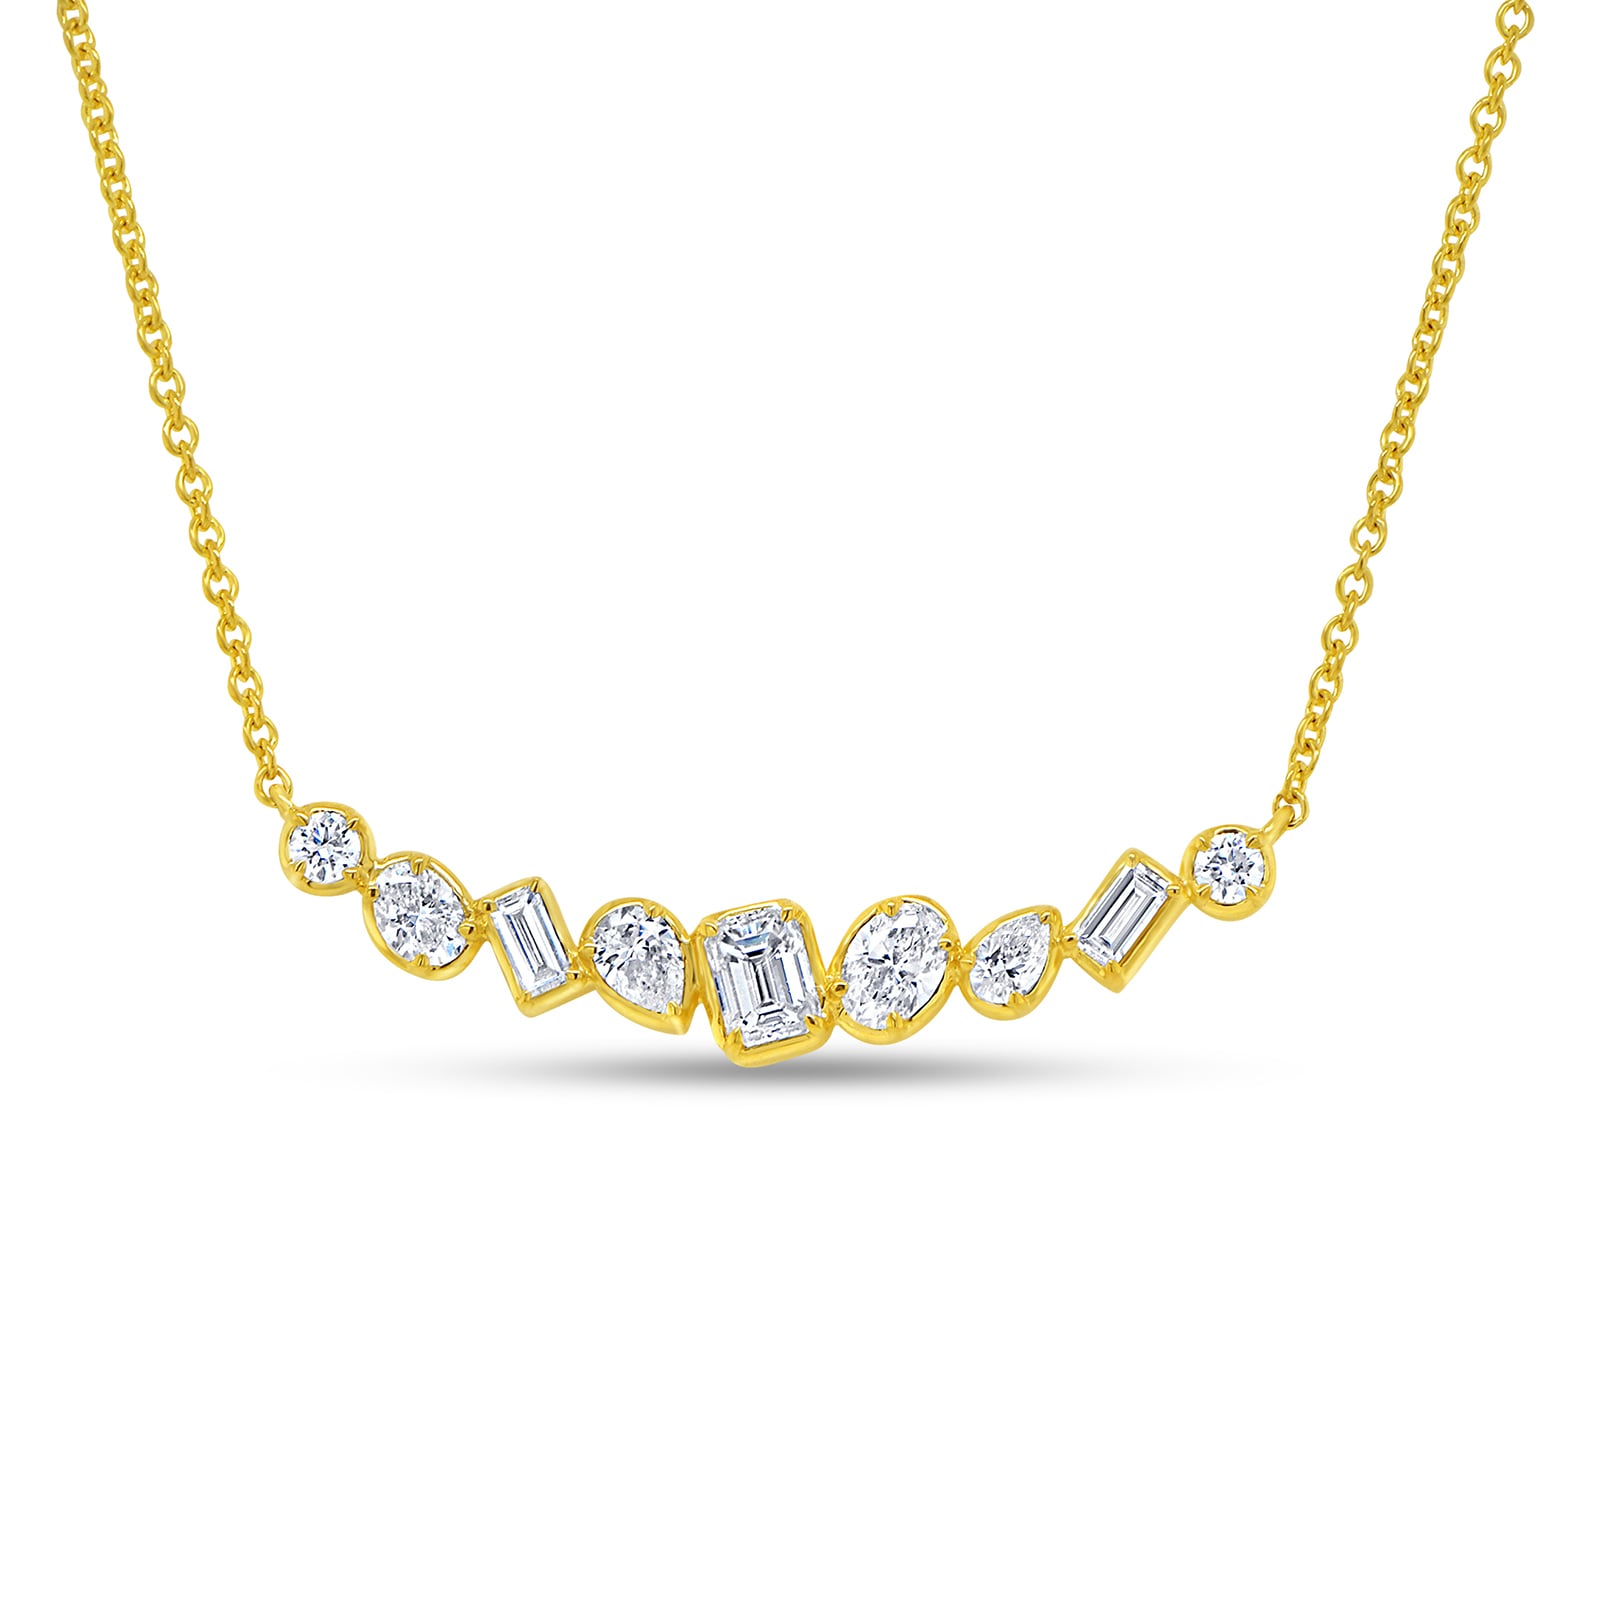 18k Yellow Gold 0.76cttw Mixed Cut Diamond Bar Necklace 18